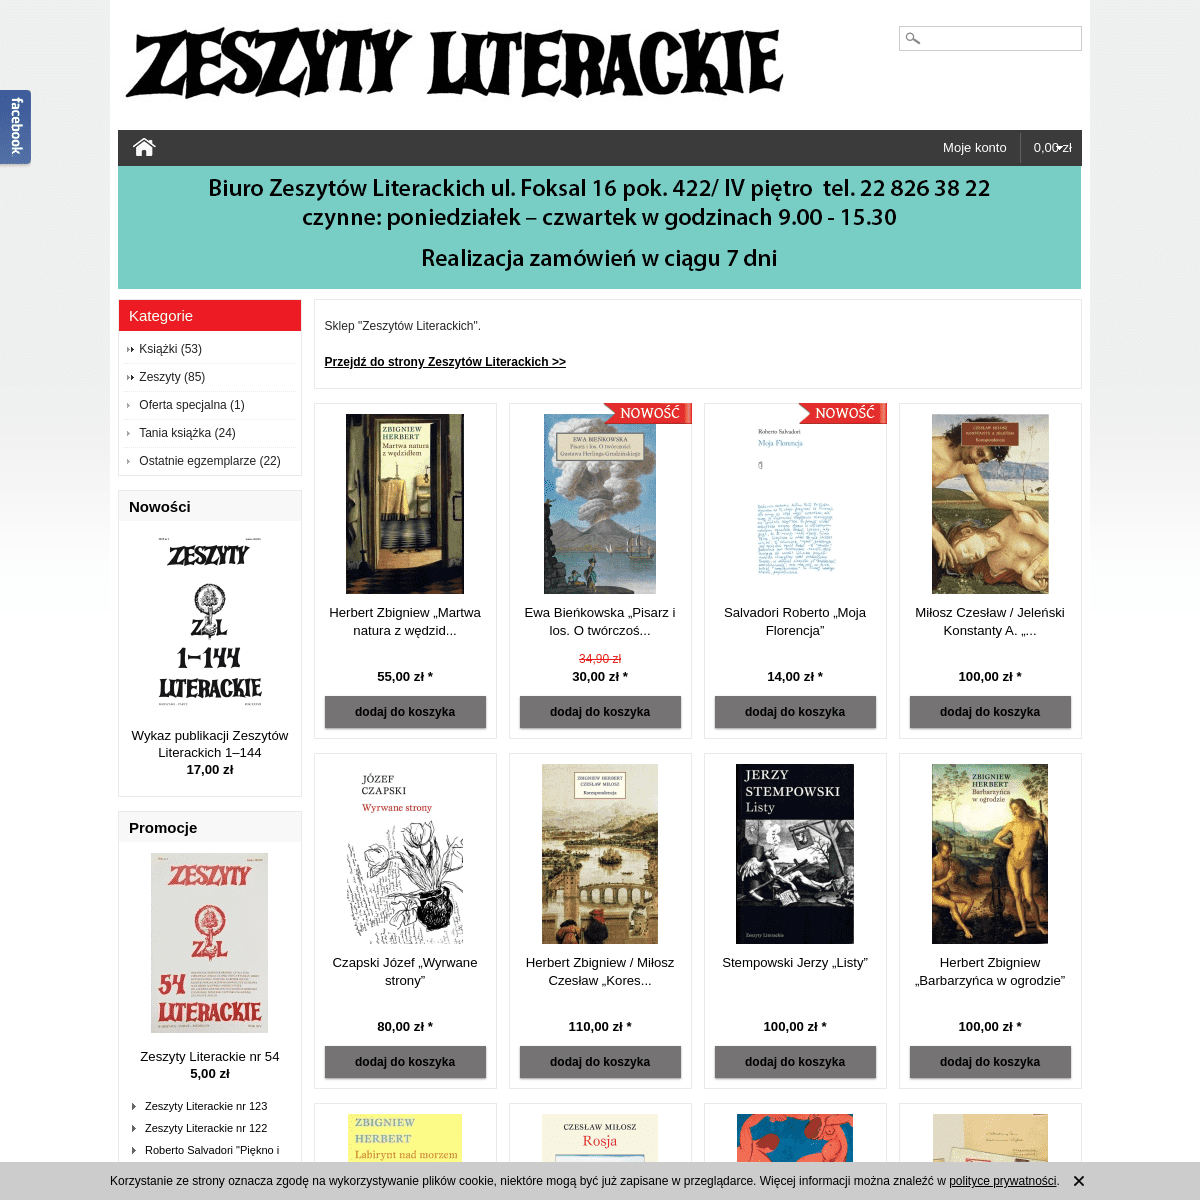 A complete backup of zeszytyliterackie.com